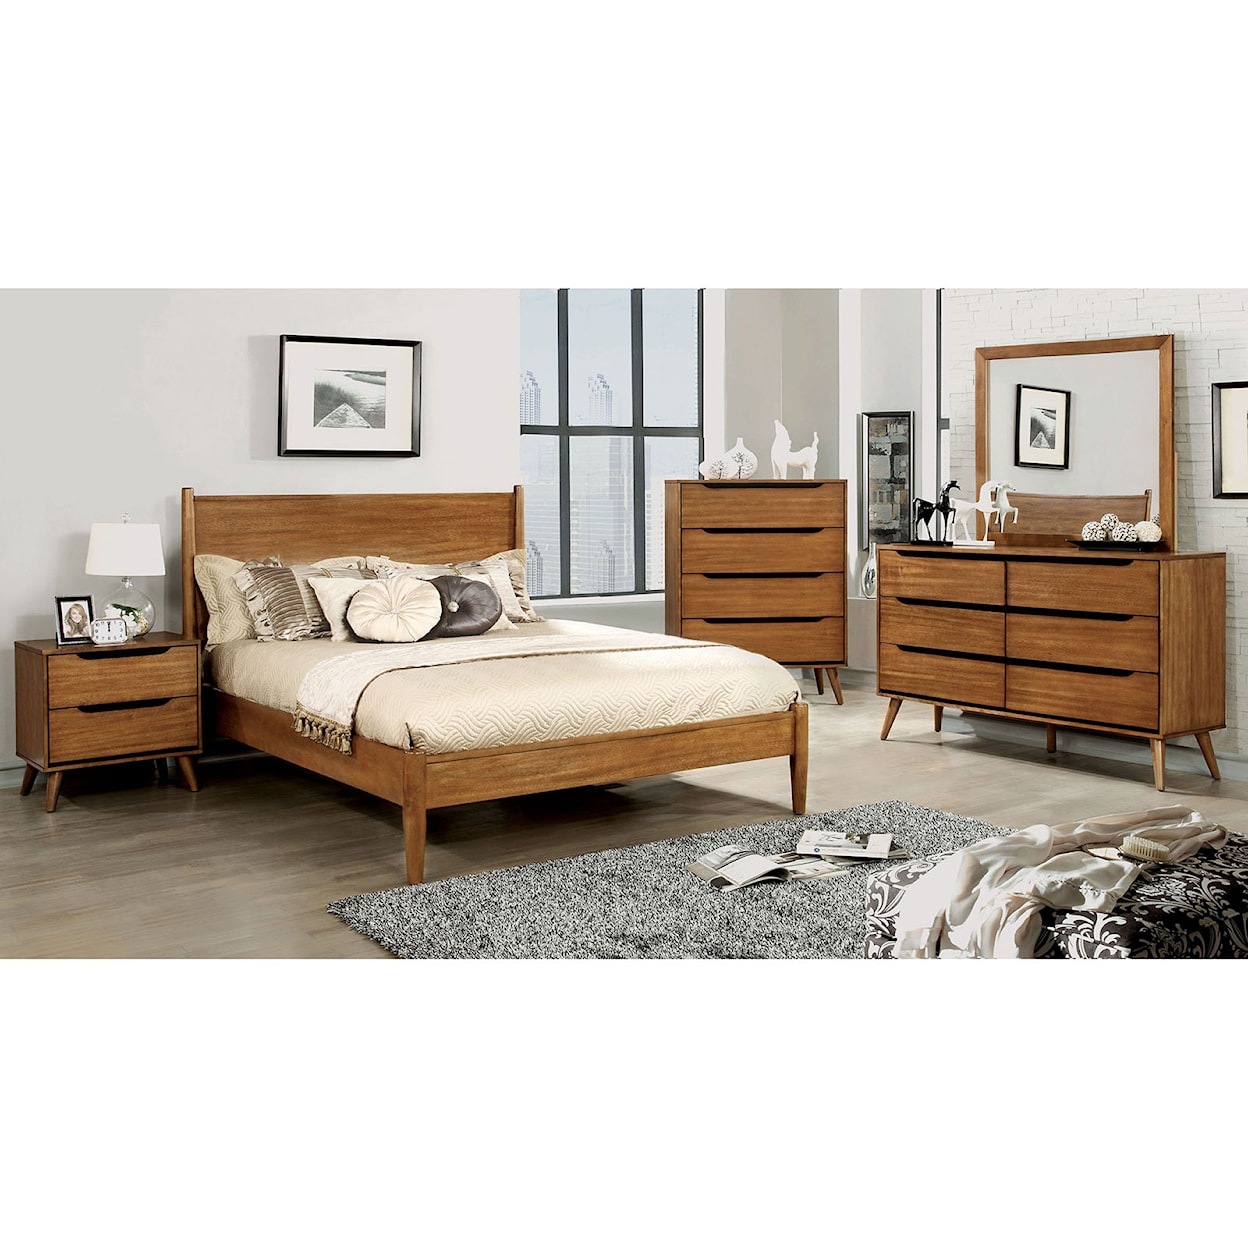 Furniture of America Lennart 4 Pc. Full Bedroom Set